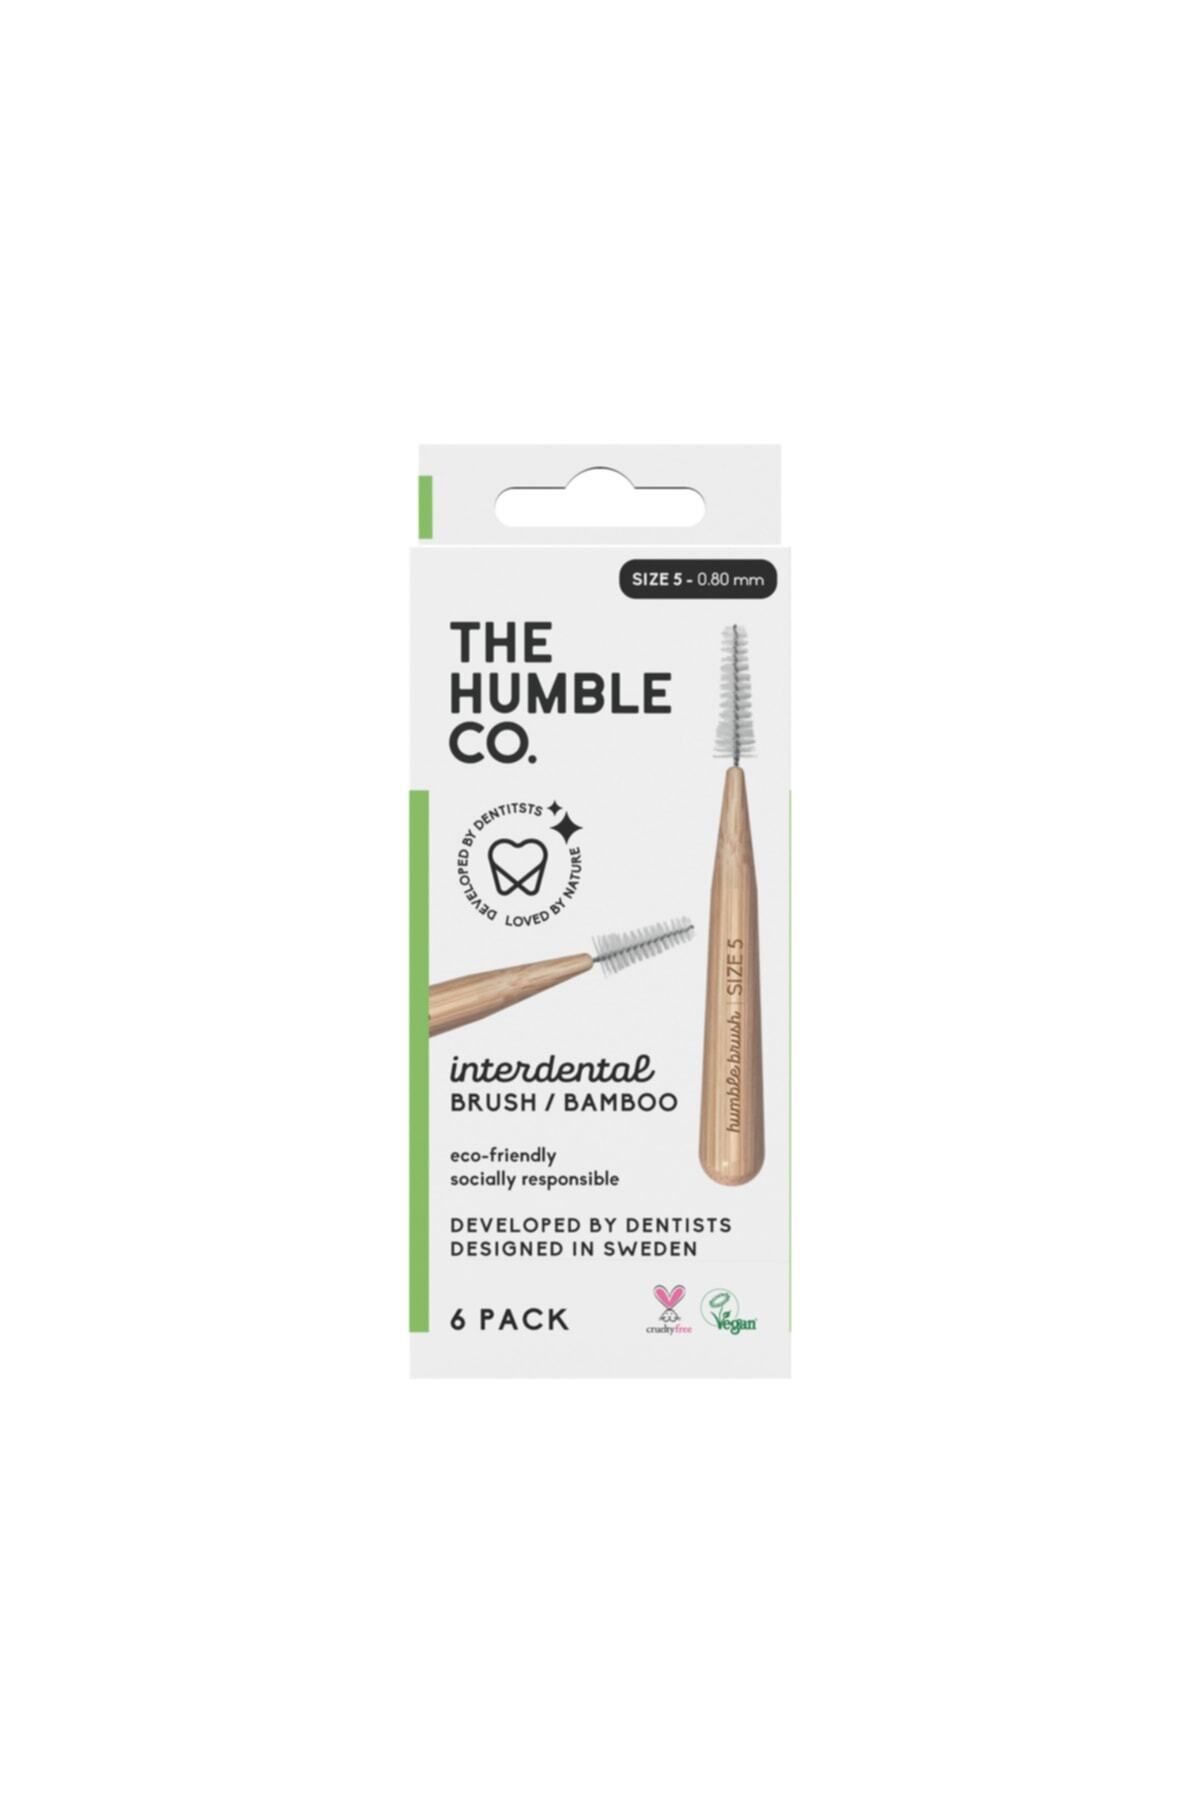 Humble Brush Bambu Arayüz Diş Fırçası Size 5 0.80mm